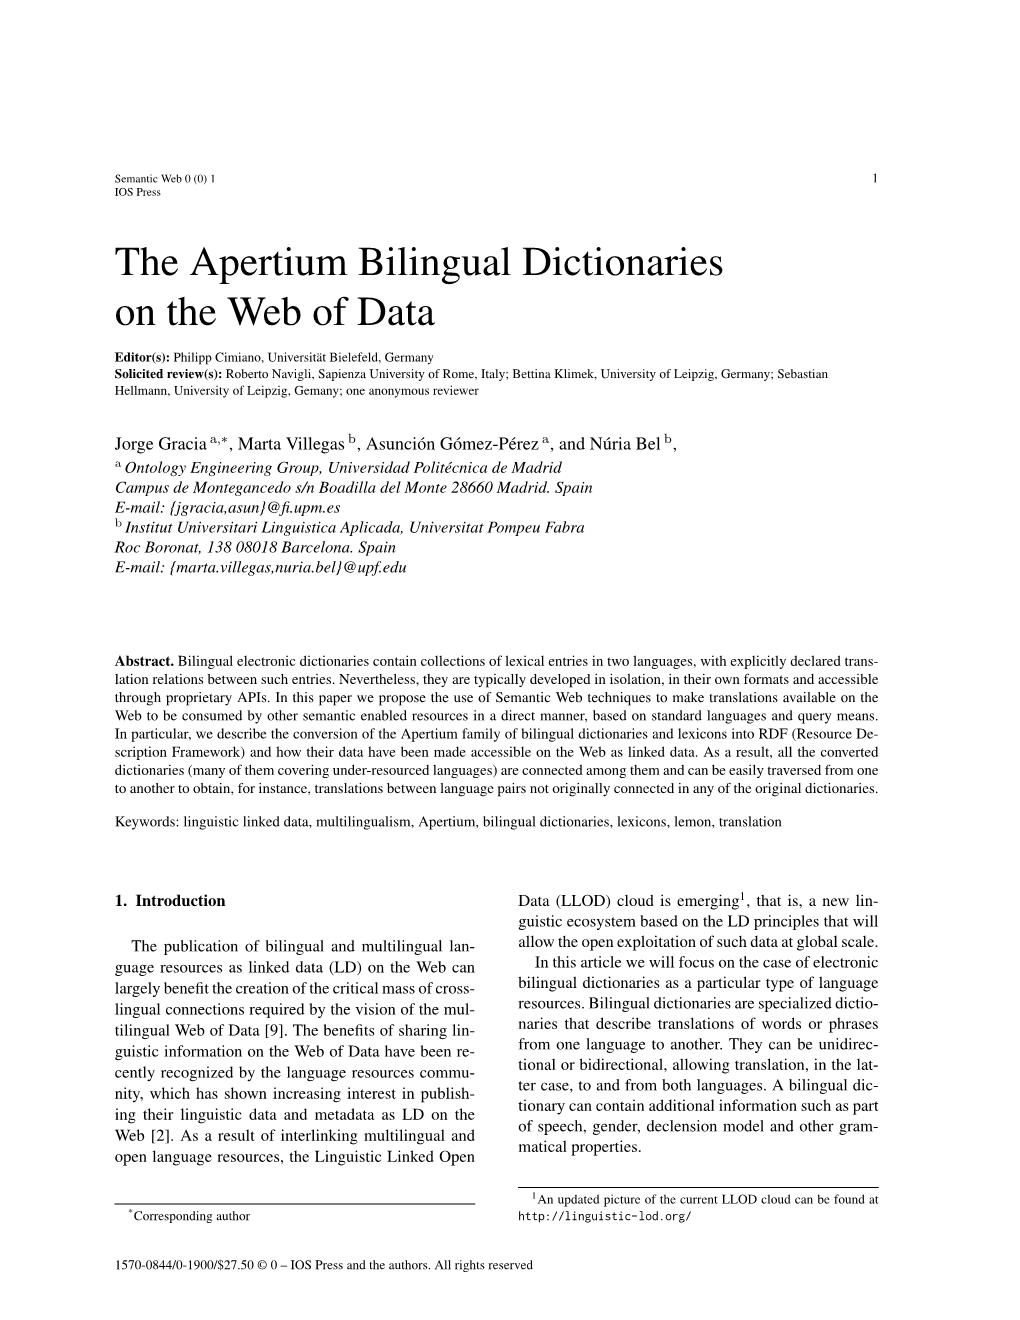 The Apertium Bilingual Dictionaries on the Web of Data